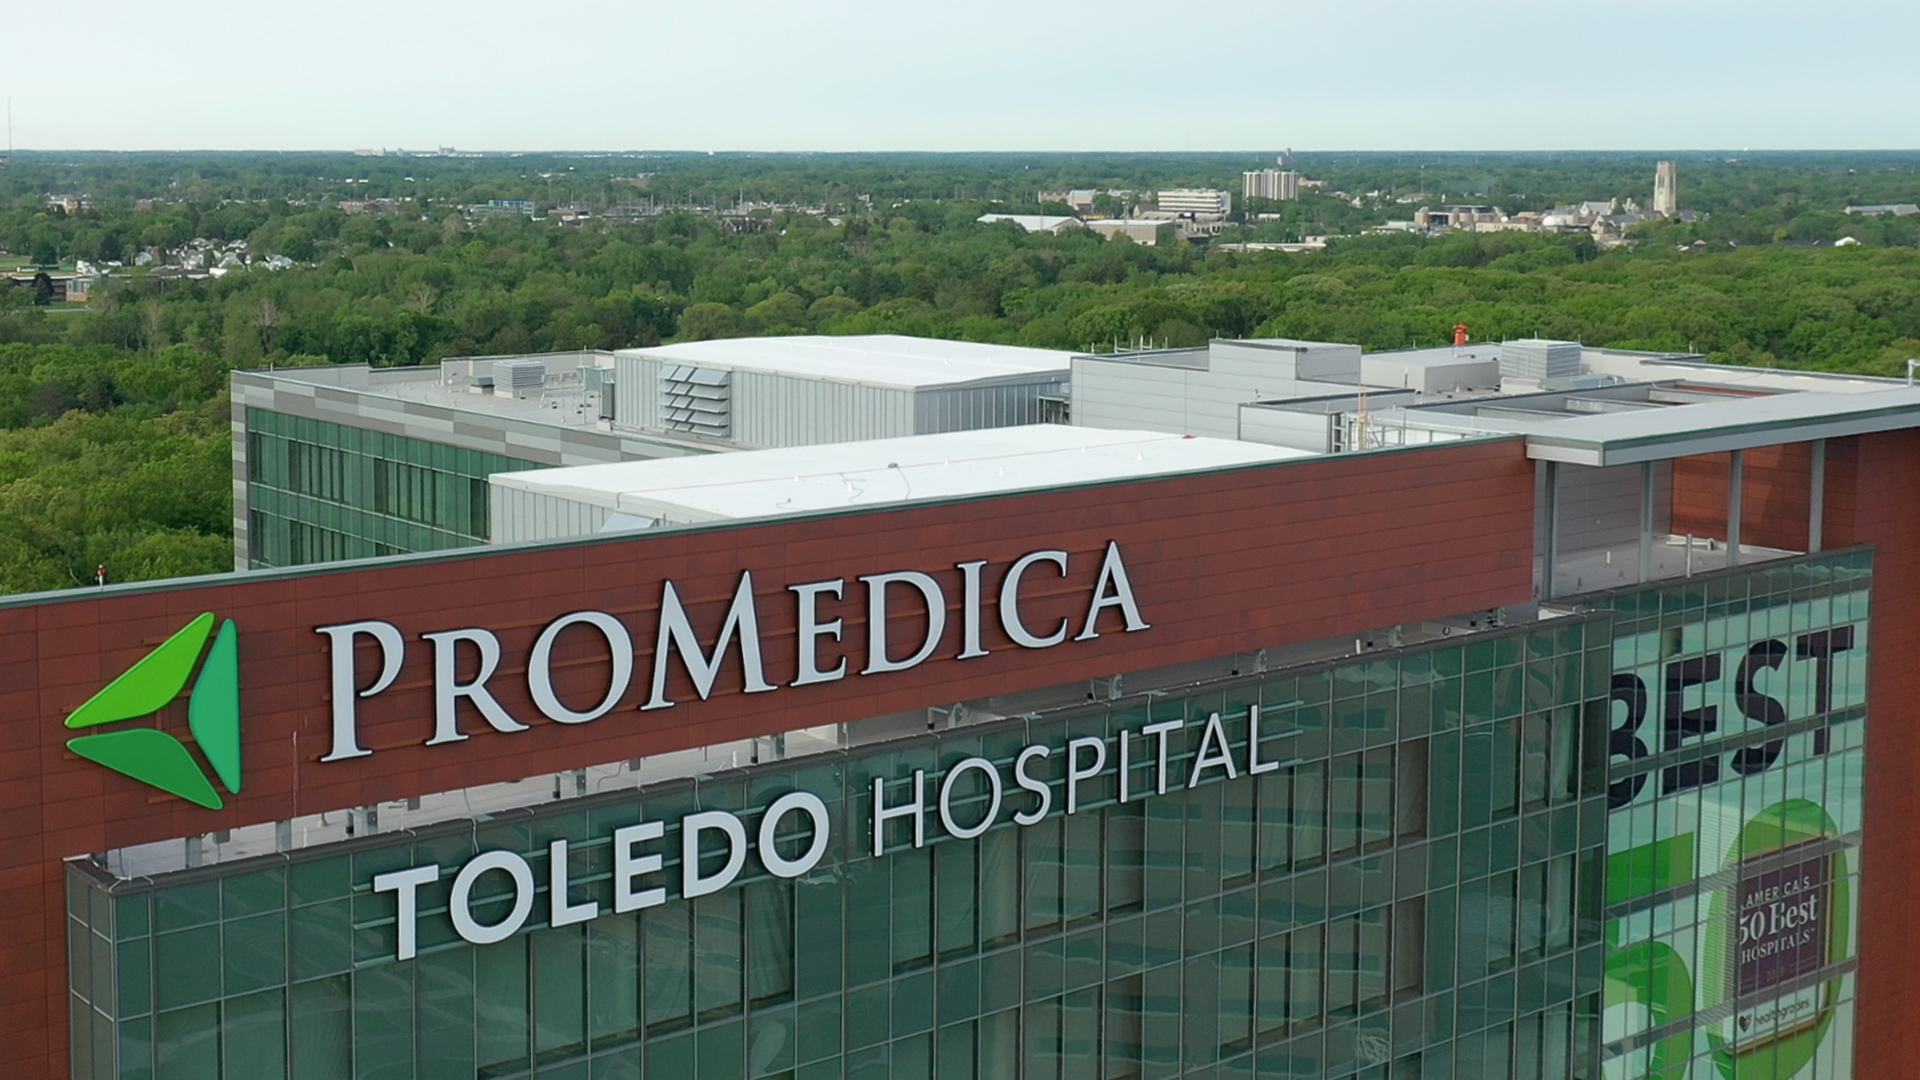 Photo of ProMedica Toledo Hospital with UToledo in the background.